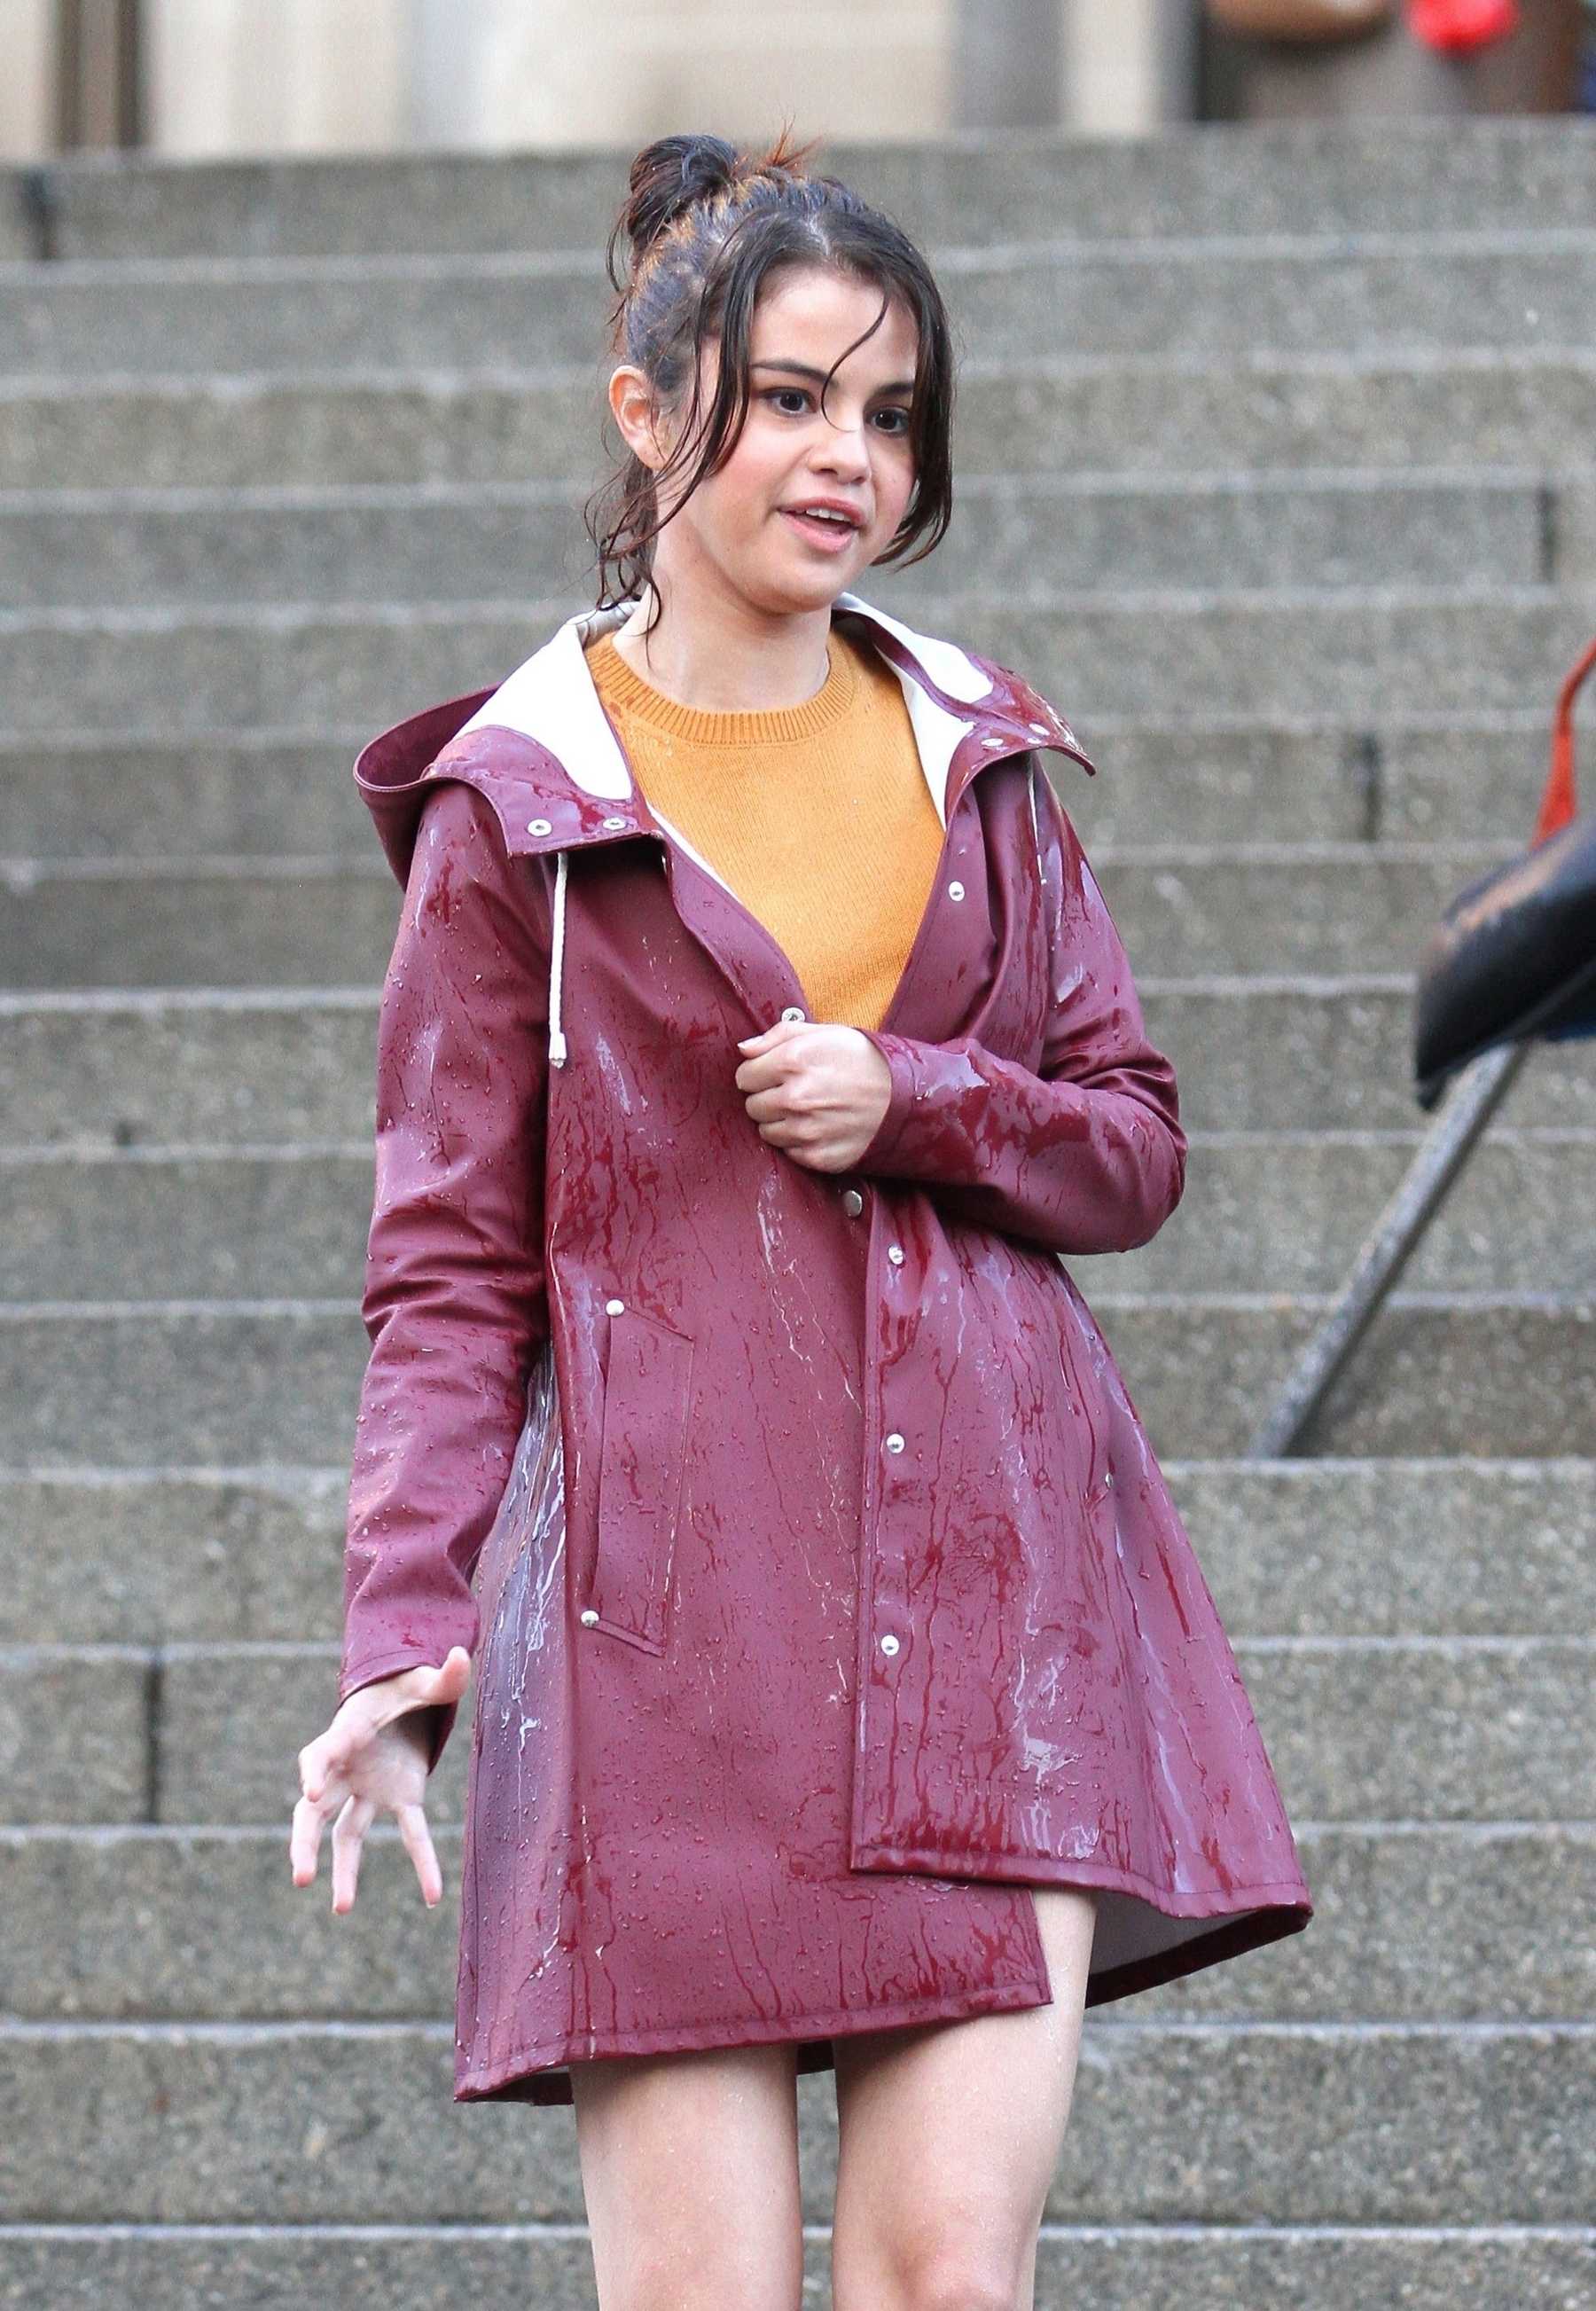 Selena_Gomez_-_Filming_Woody_Allen_in_NYC_on_October_3-20.jpg